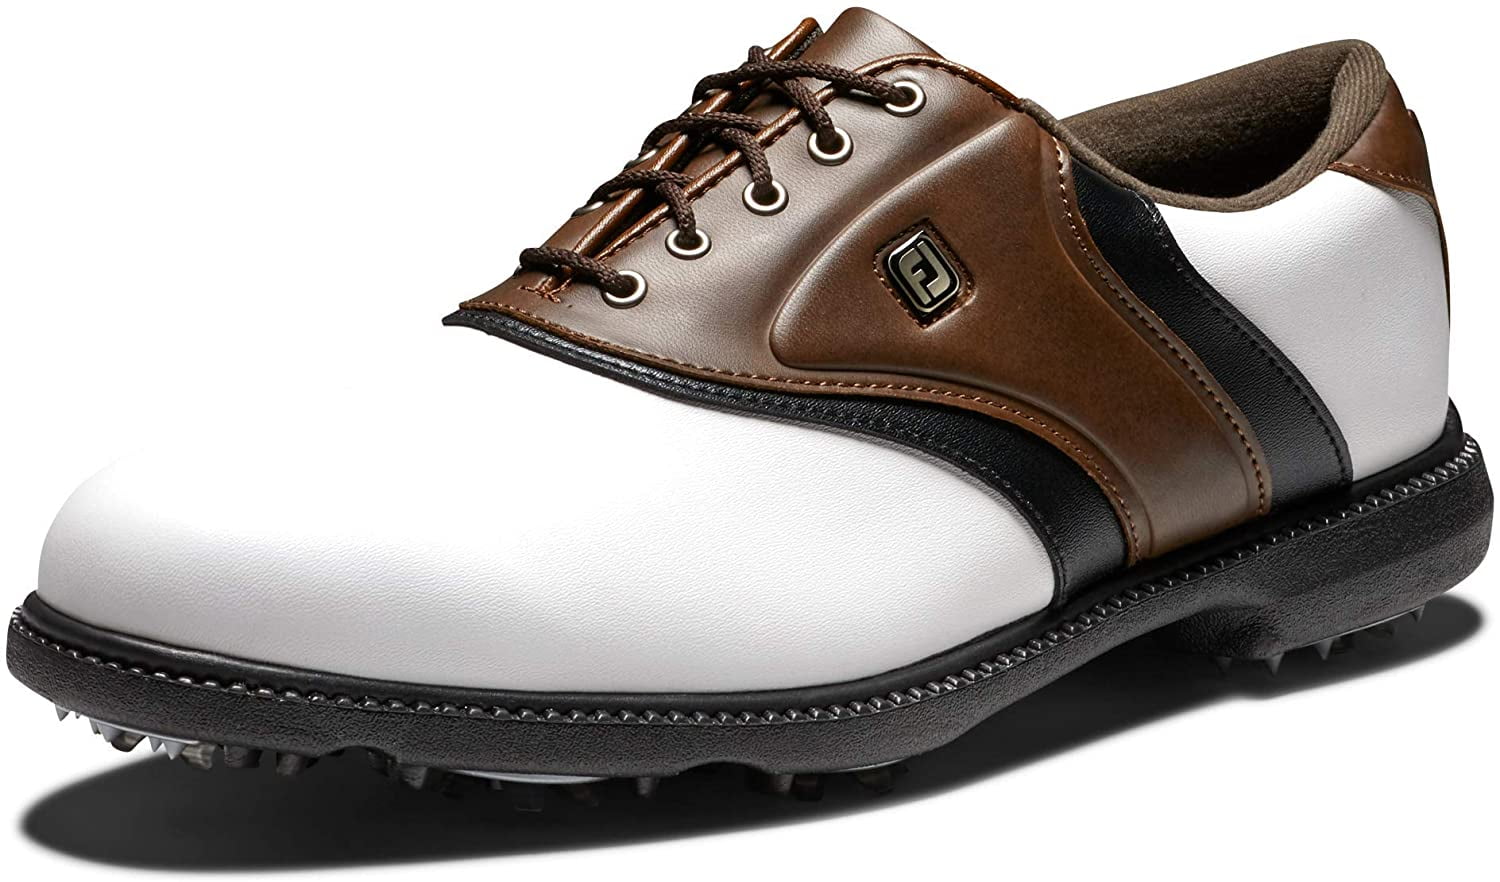 FootJoy FJ Originals Golf Shoes (White/Brown, 8) - Walmart.com